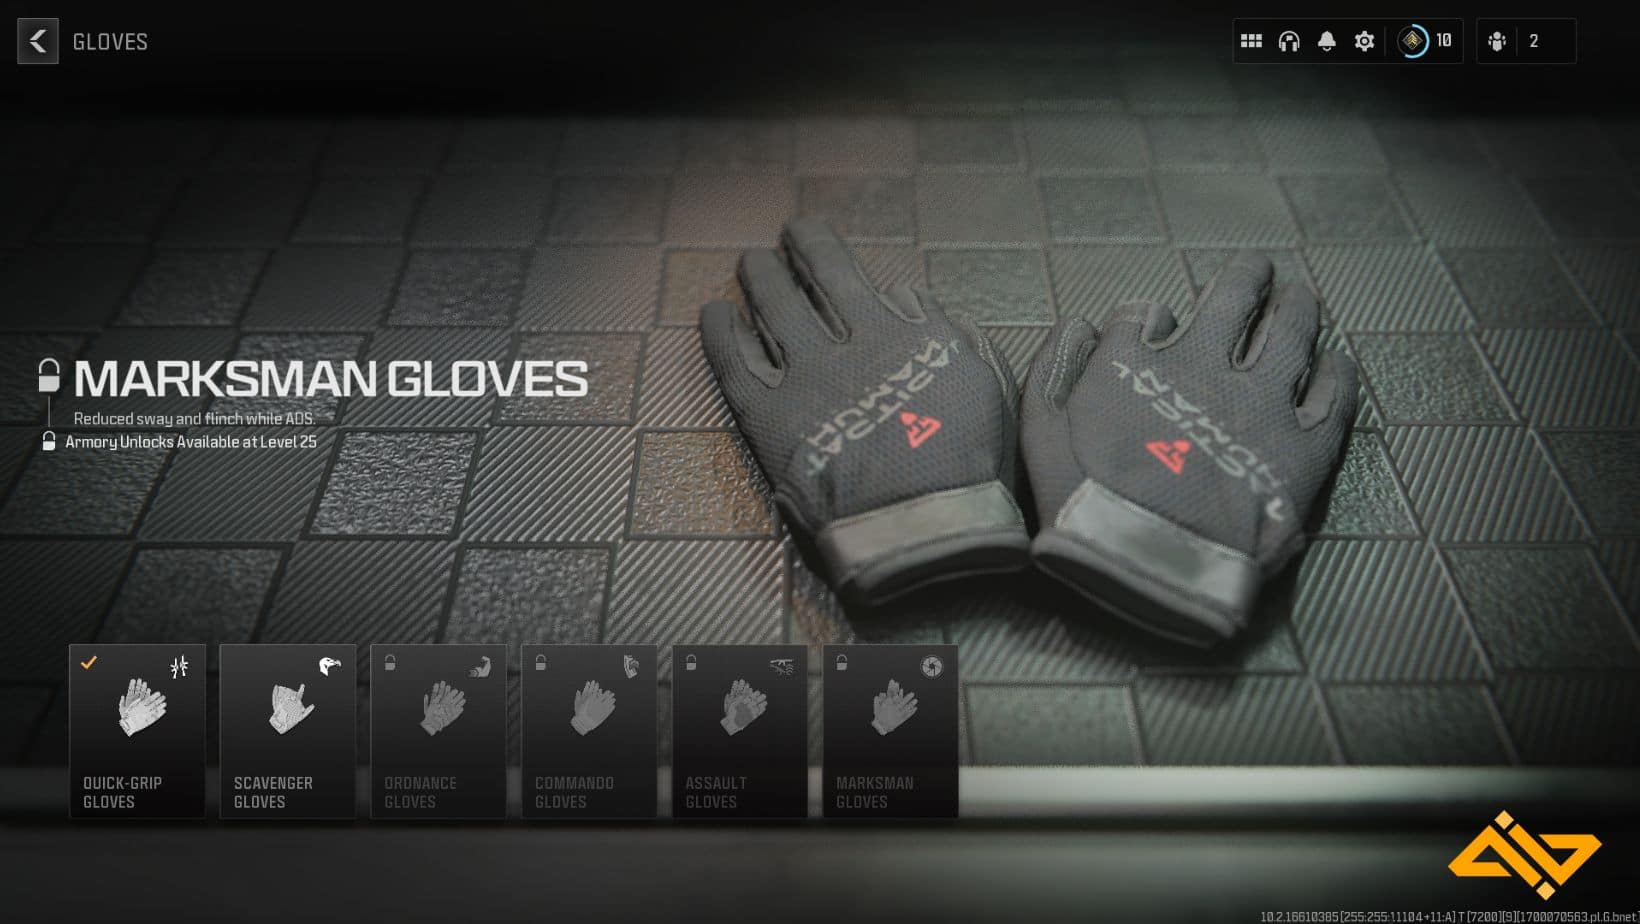 Marksmen Gloves